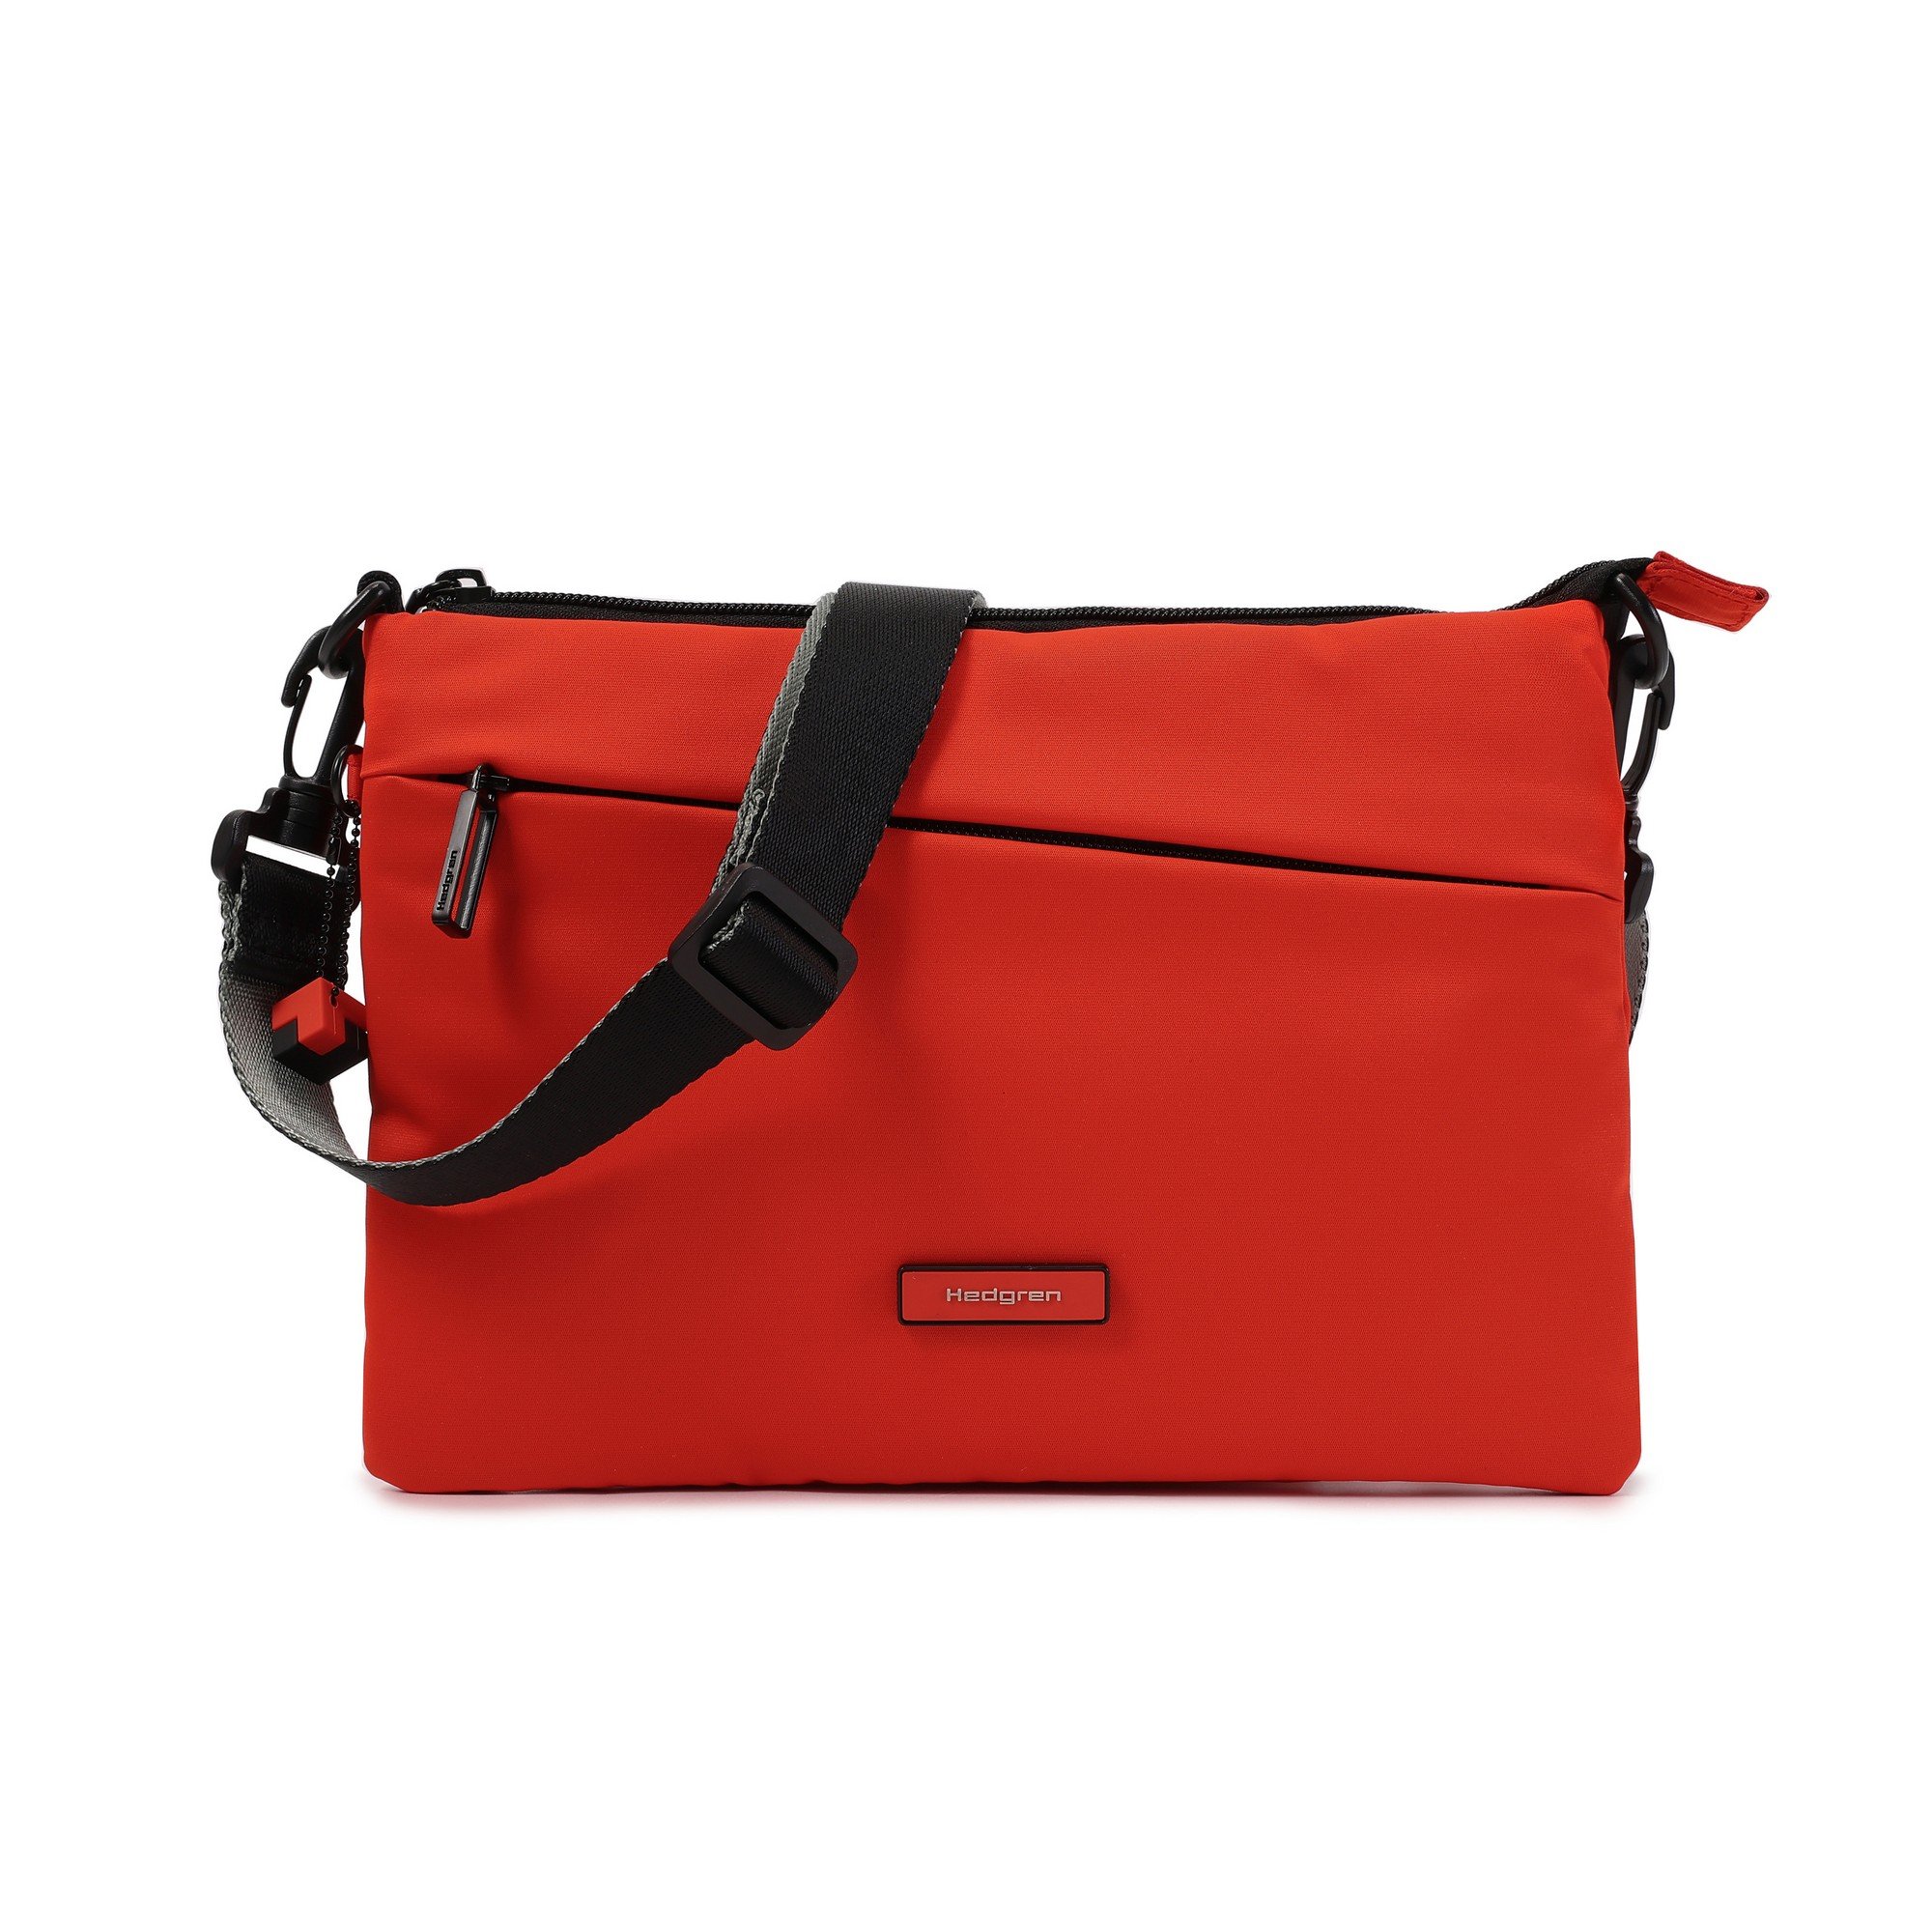 Hedgren Cocoon Cozy Shoulder Bag Umhängetasche Tasche Safari Beige | eBay